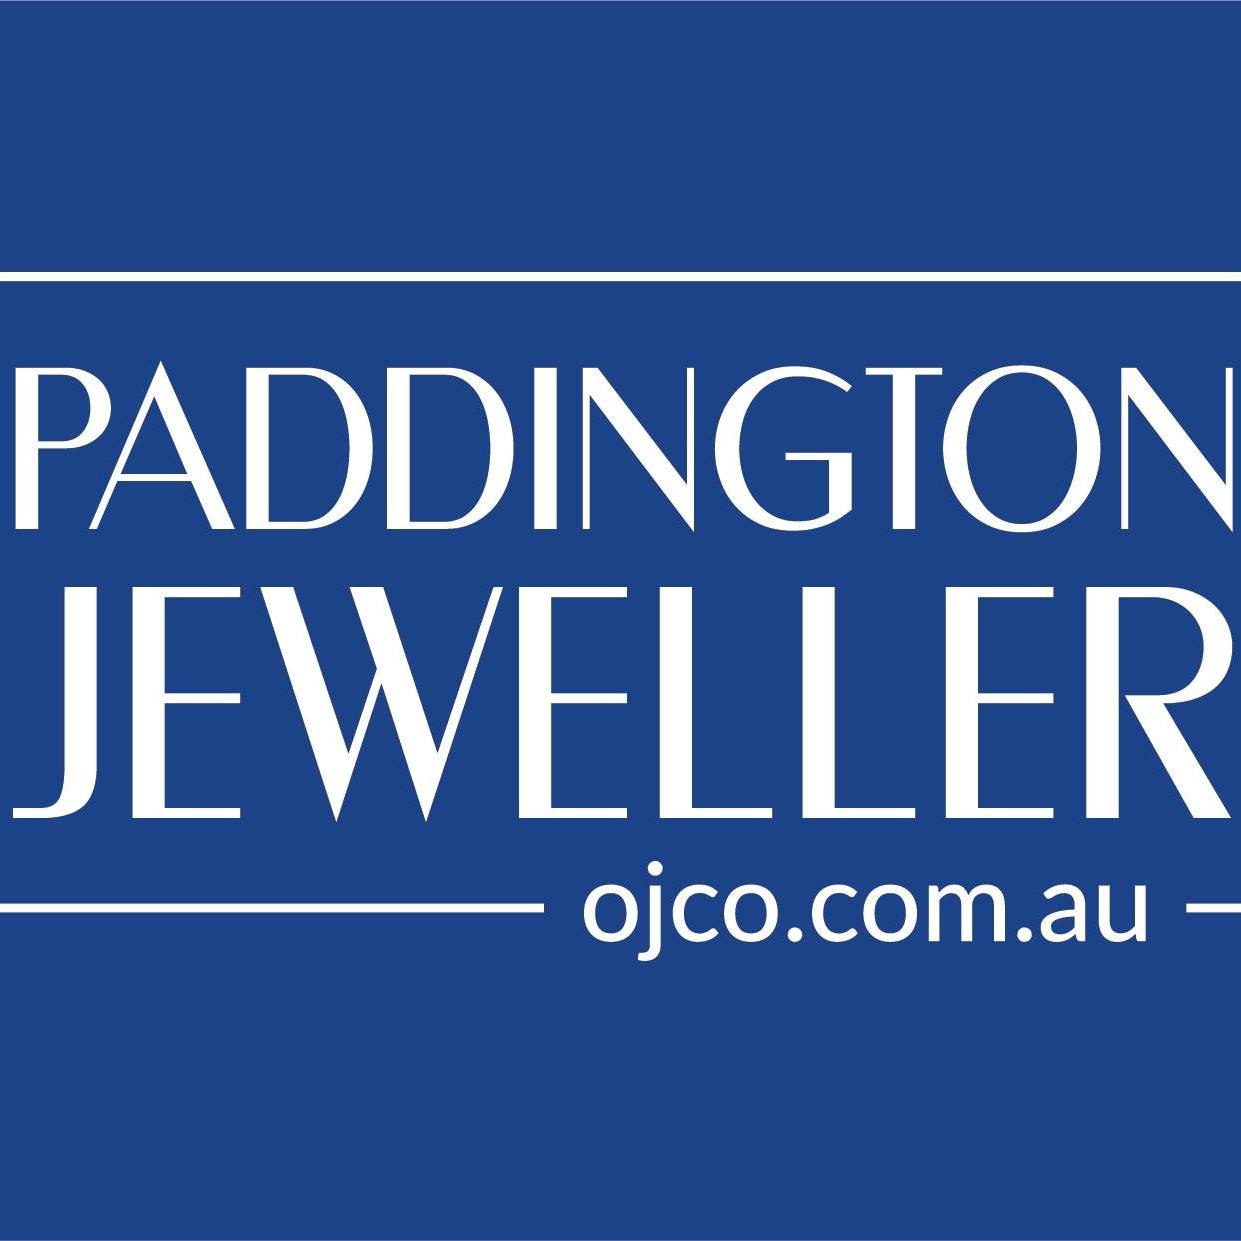 Business logo of Paddington Jeweller - The Online Jewellery Company